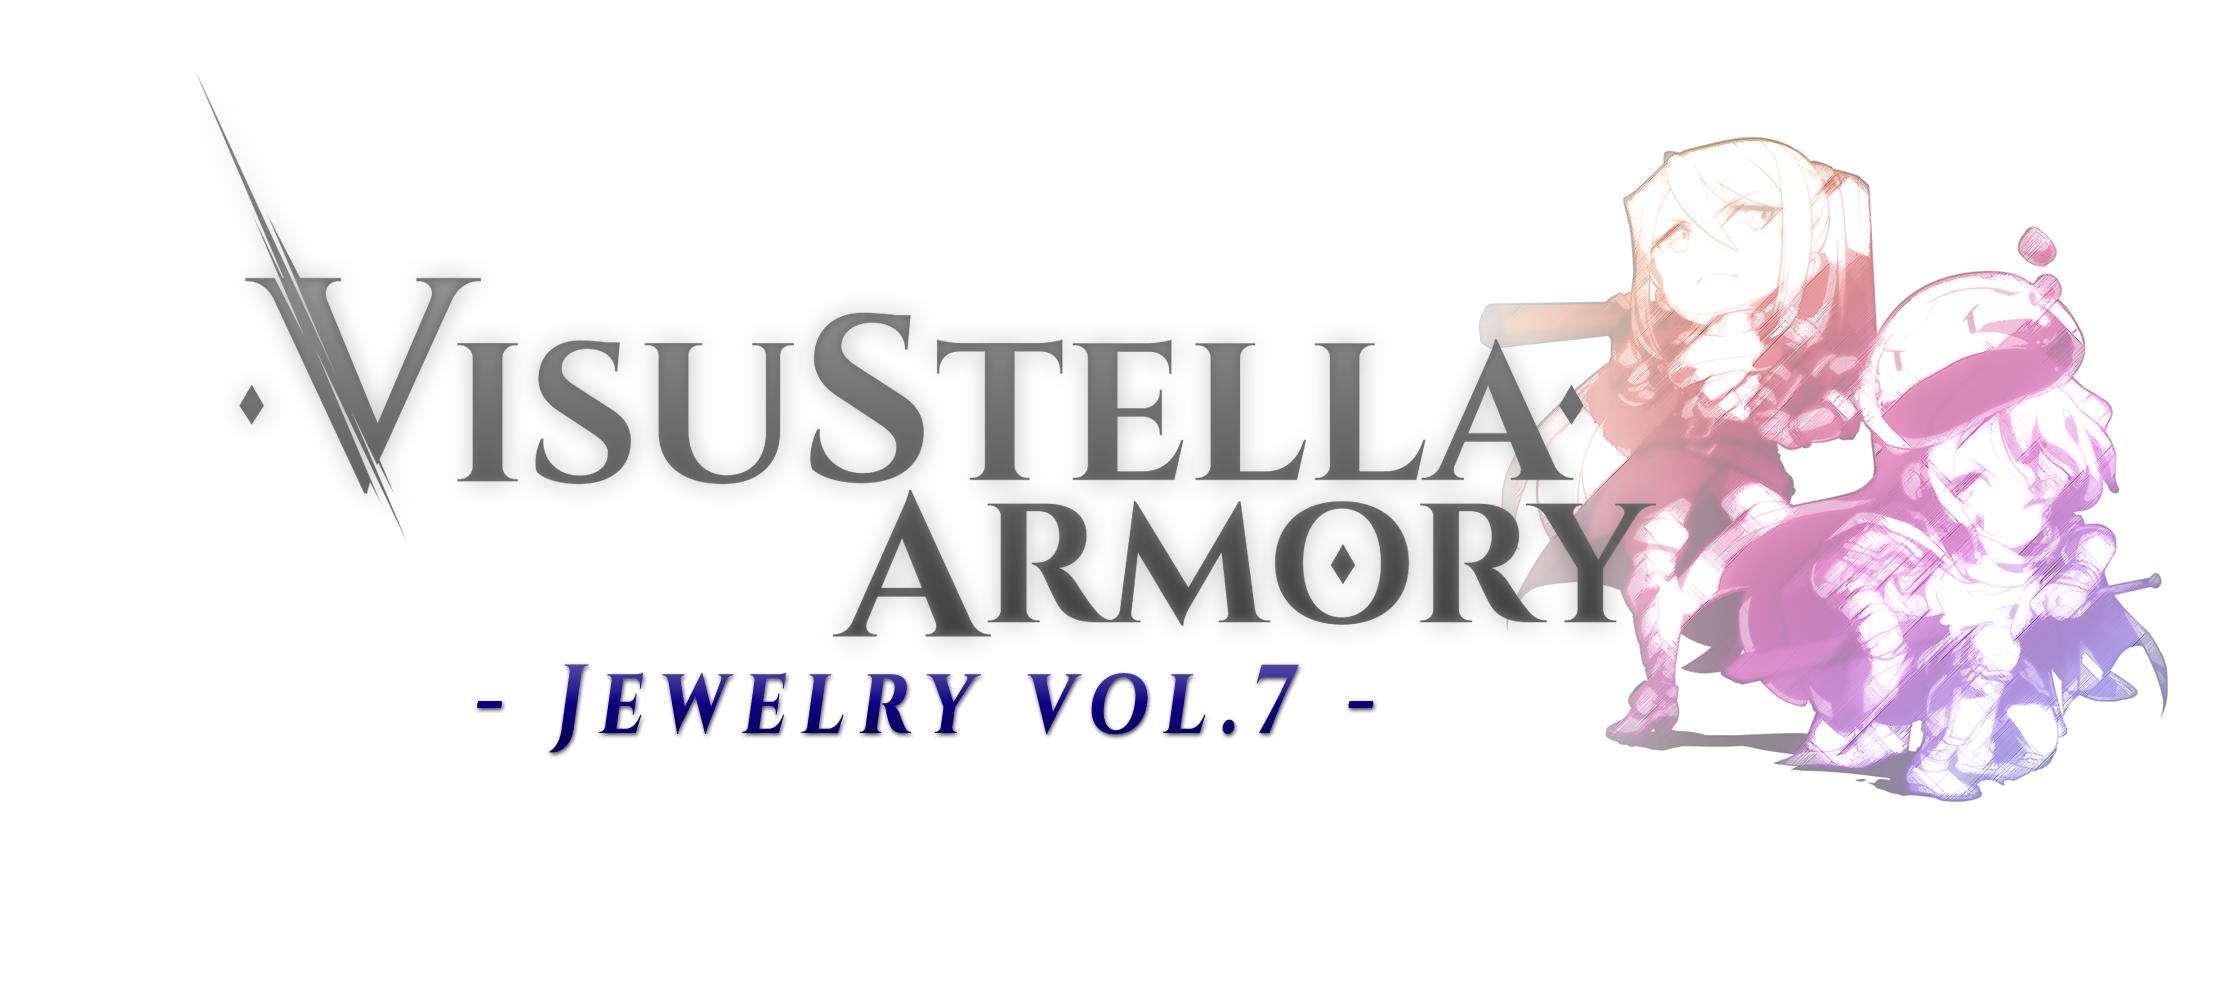 VisuStella Armory: Jewelry Vol.07